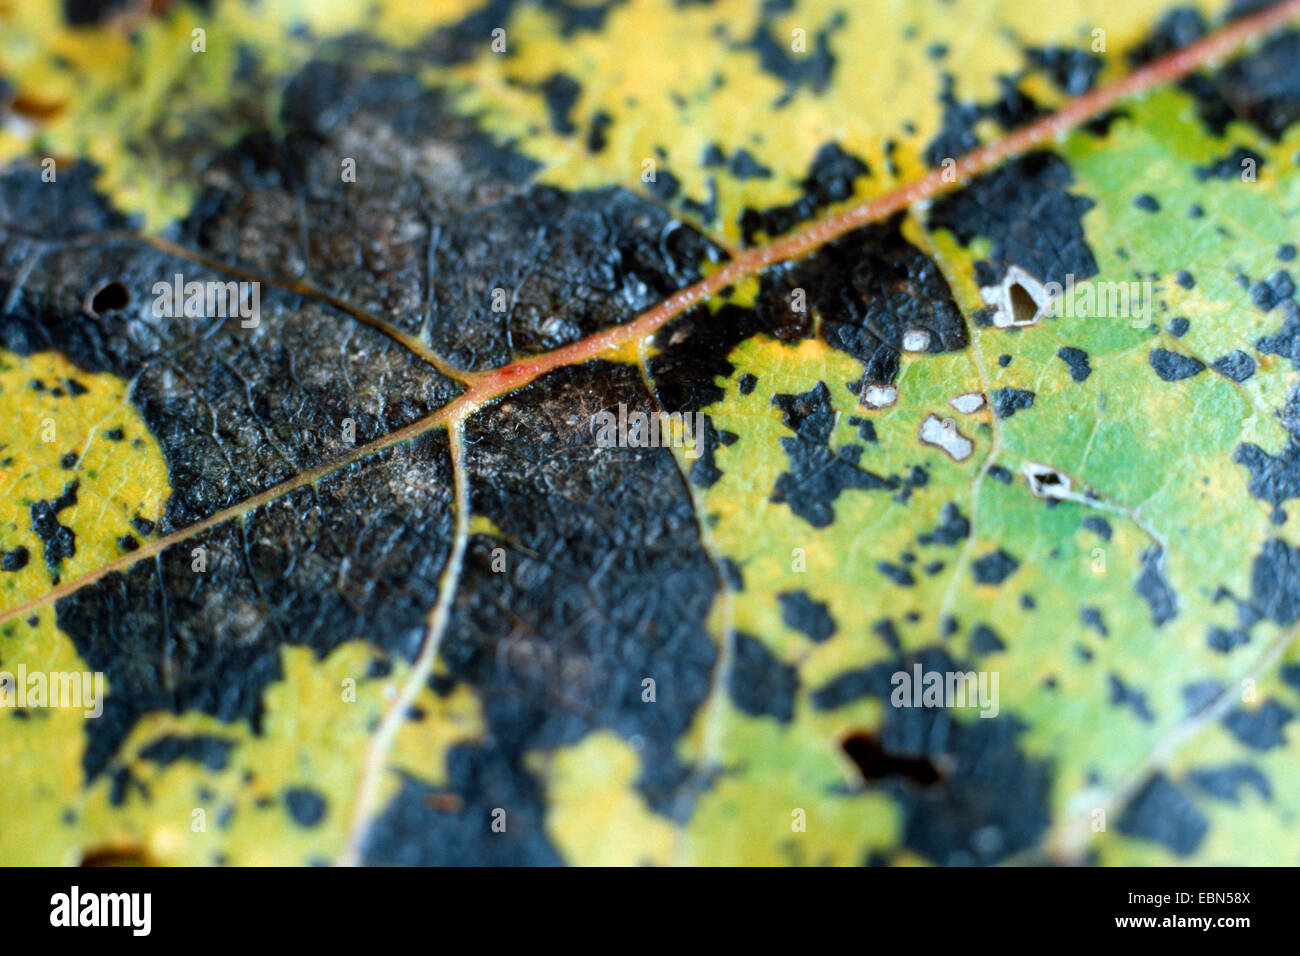 Marssonia Leaf Spot (Marssonina brunnea, Marssonia populi, Marssonia castagnei), on leaves of Common Aspen, Populus tremula, Germany Stock Photo